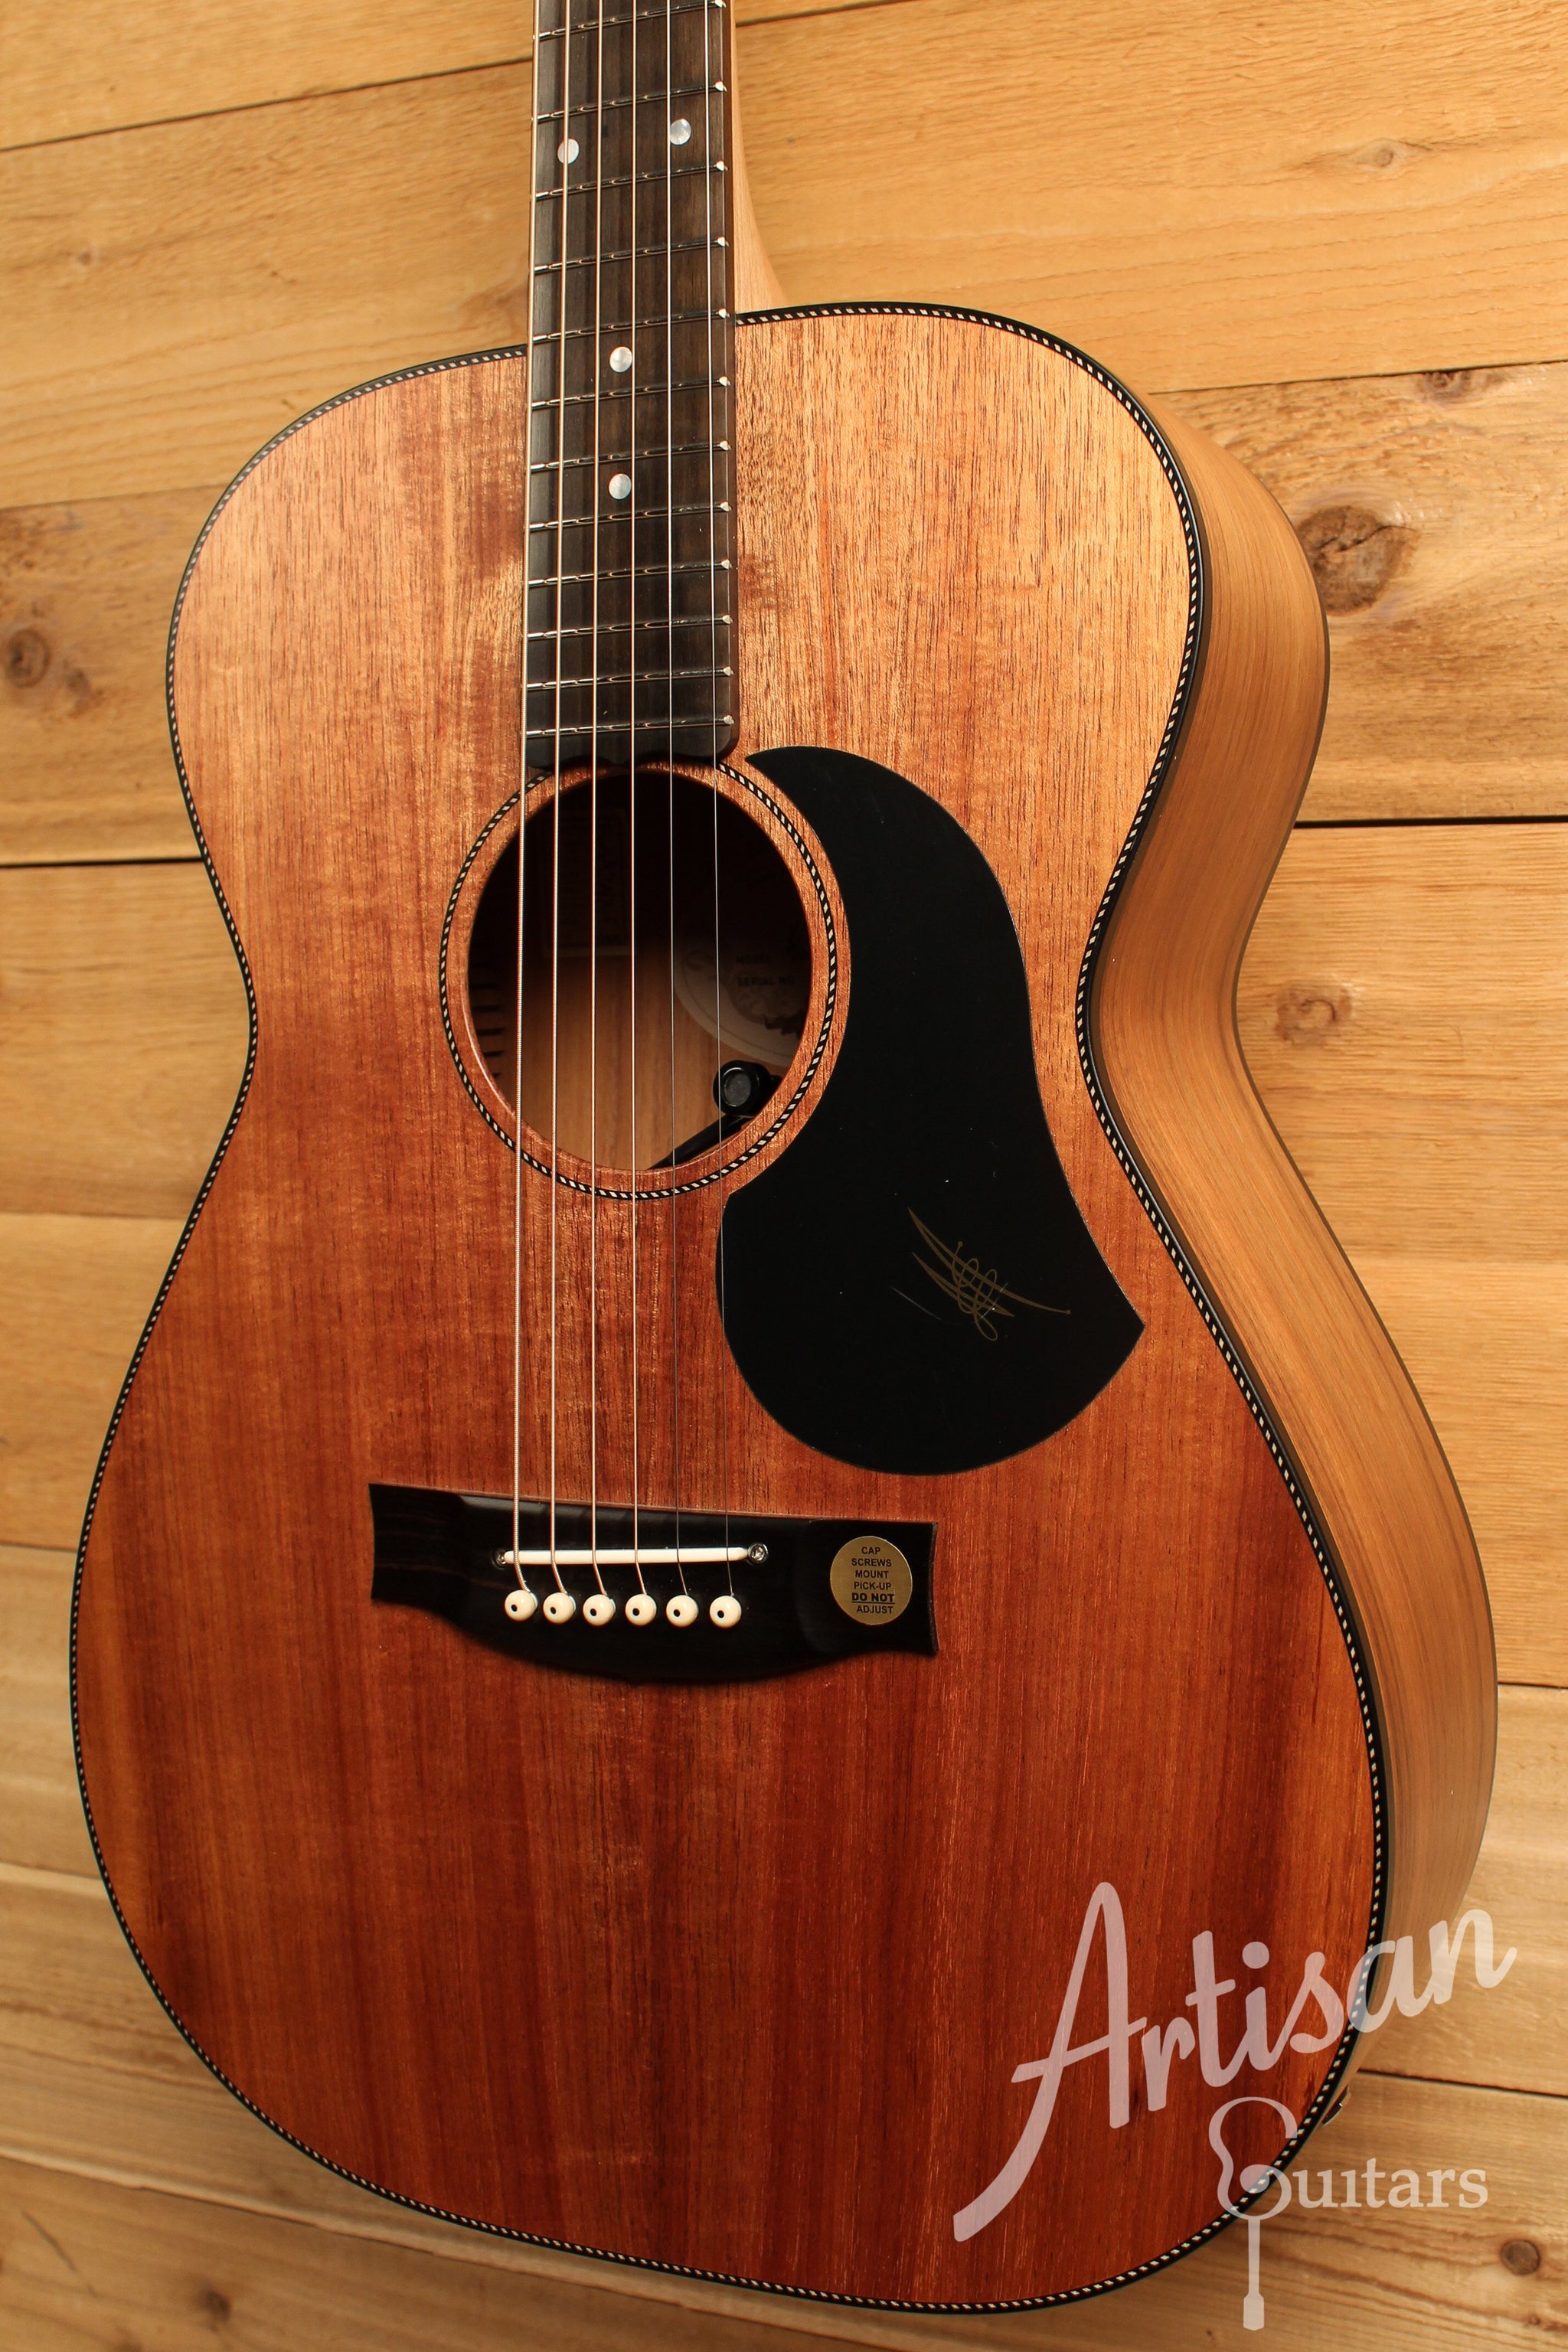 Maton EBW808 Guitar w/ Blackwood Top, Back & Sides w/ AP5 Pro Pickup System ID-13009 - Artisan Guitars